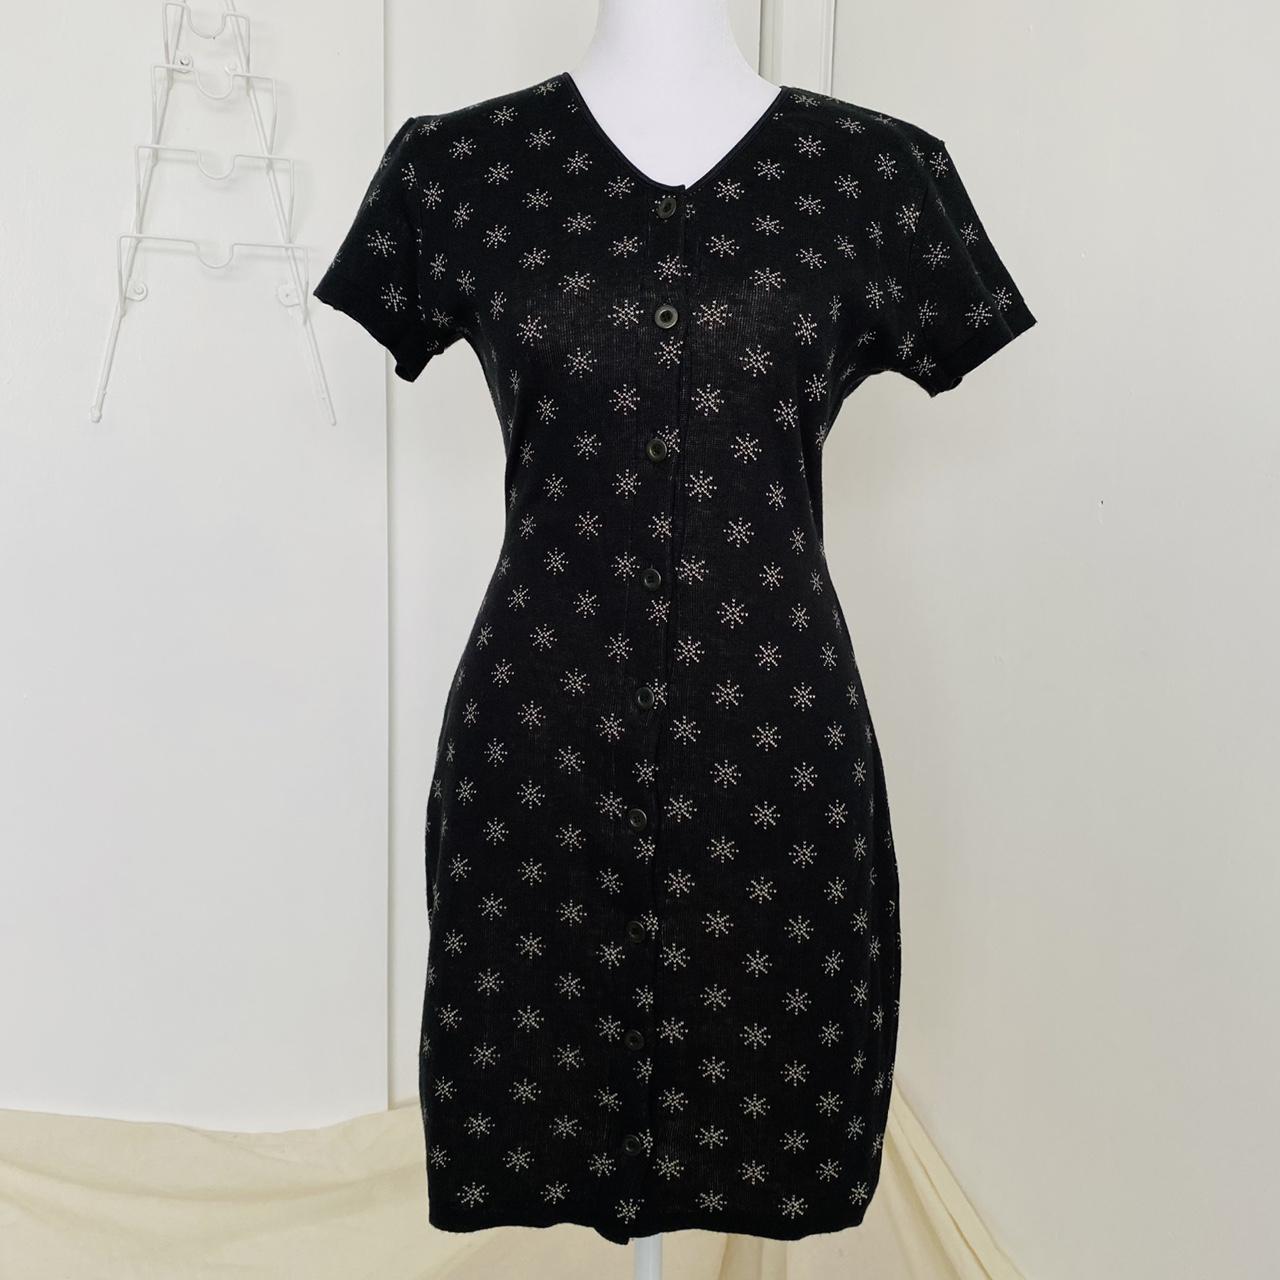 KOOKAÏ Women's Cream and Black Dress (2)